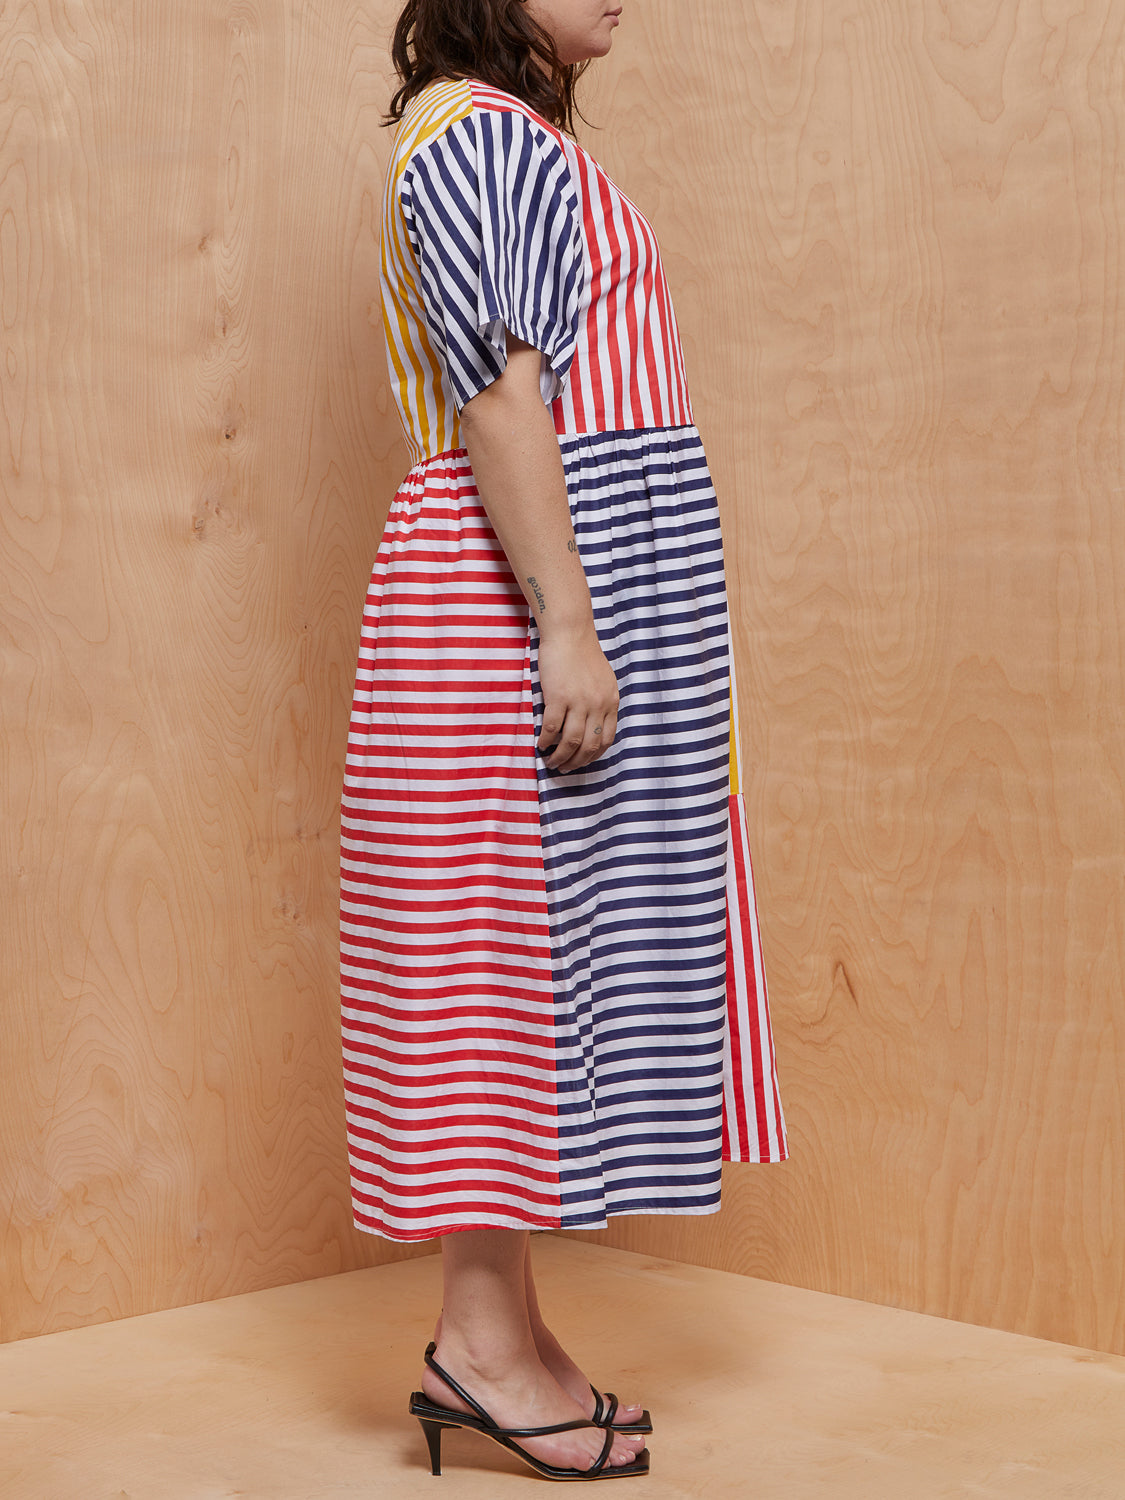 LF Markey Striped Colorblock Dress